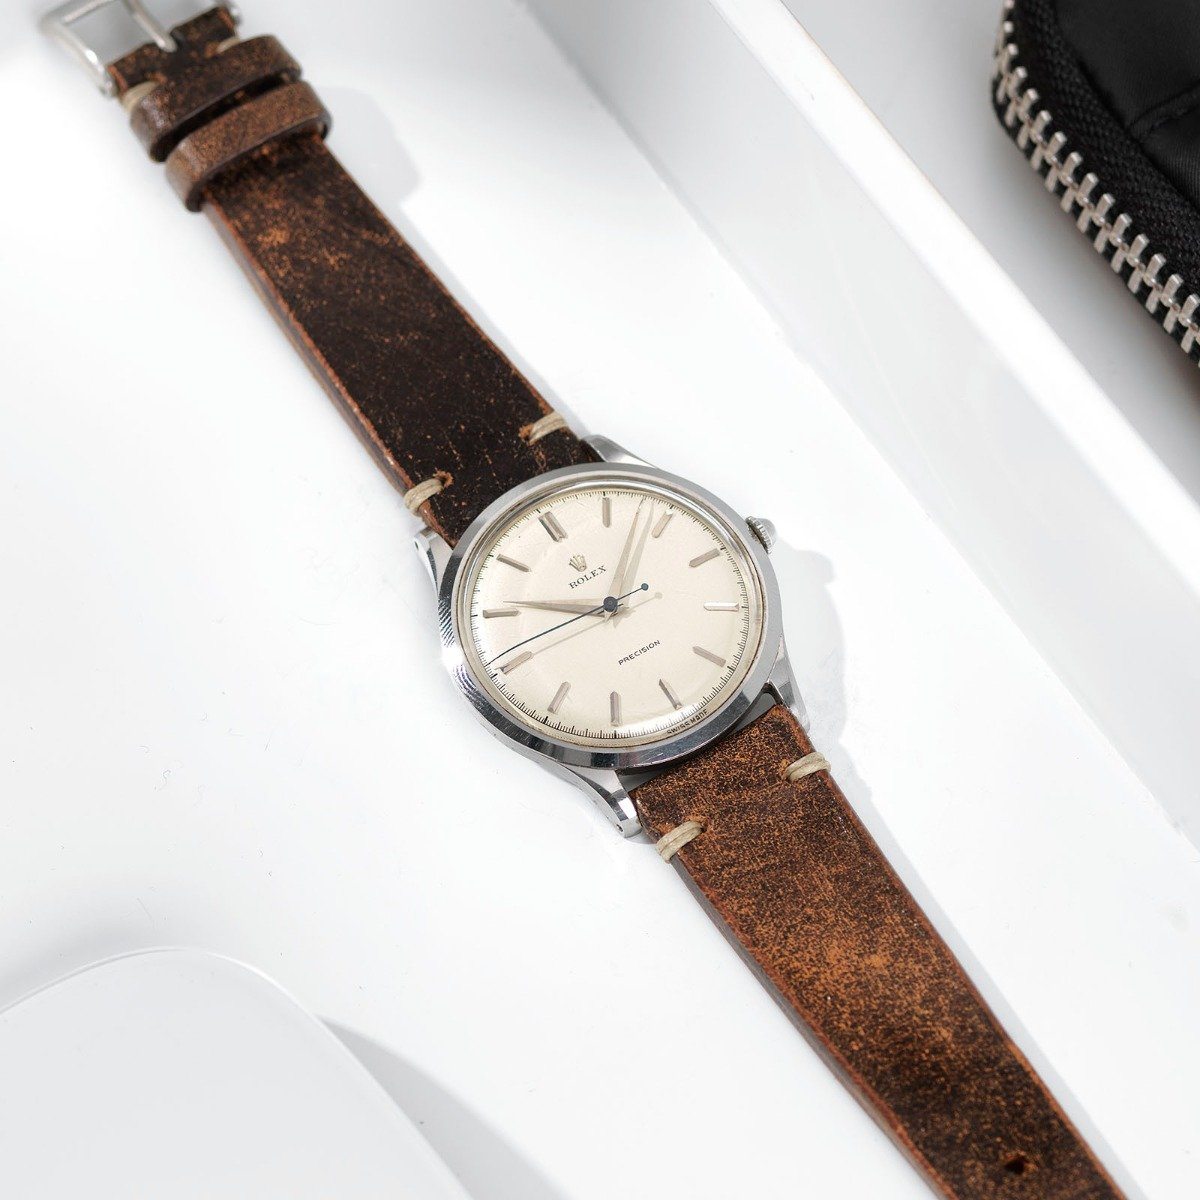 Rolex Woodie Brown Leather Watch Strap